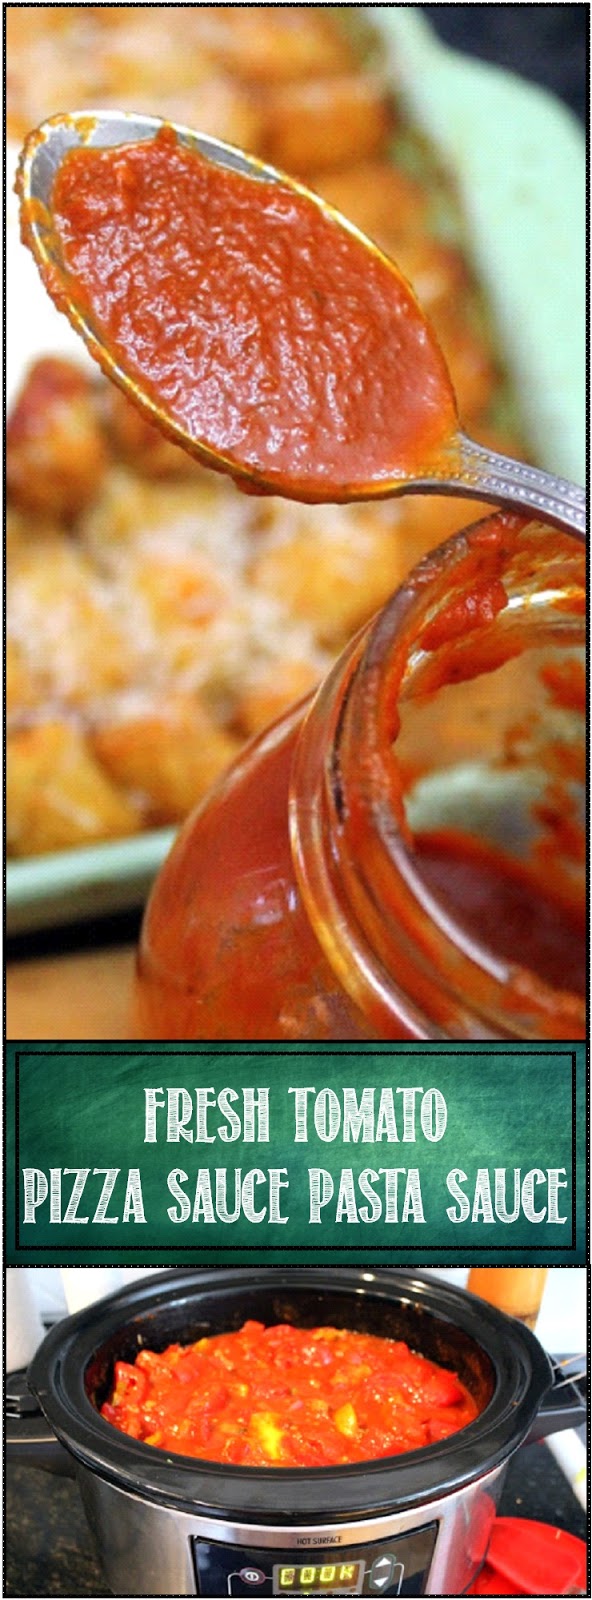 52 Ways to Cook: Fresh Tomato Pizza Sauce - Spaghetti Sauce - Pasta ...